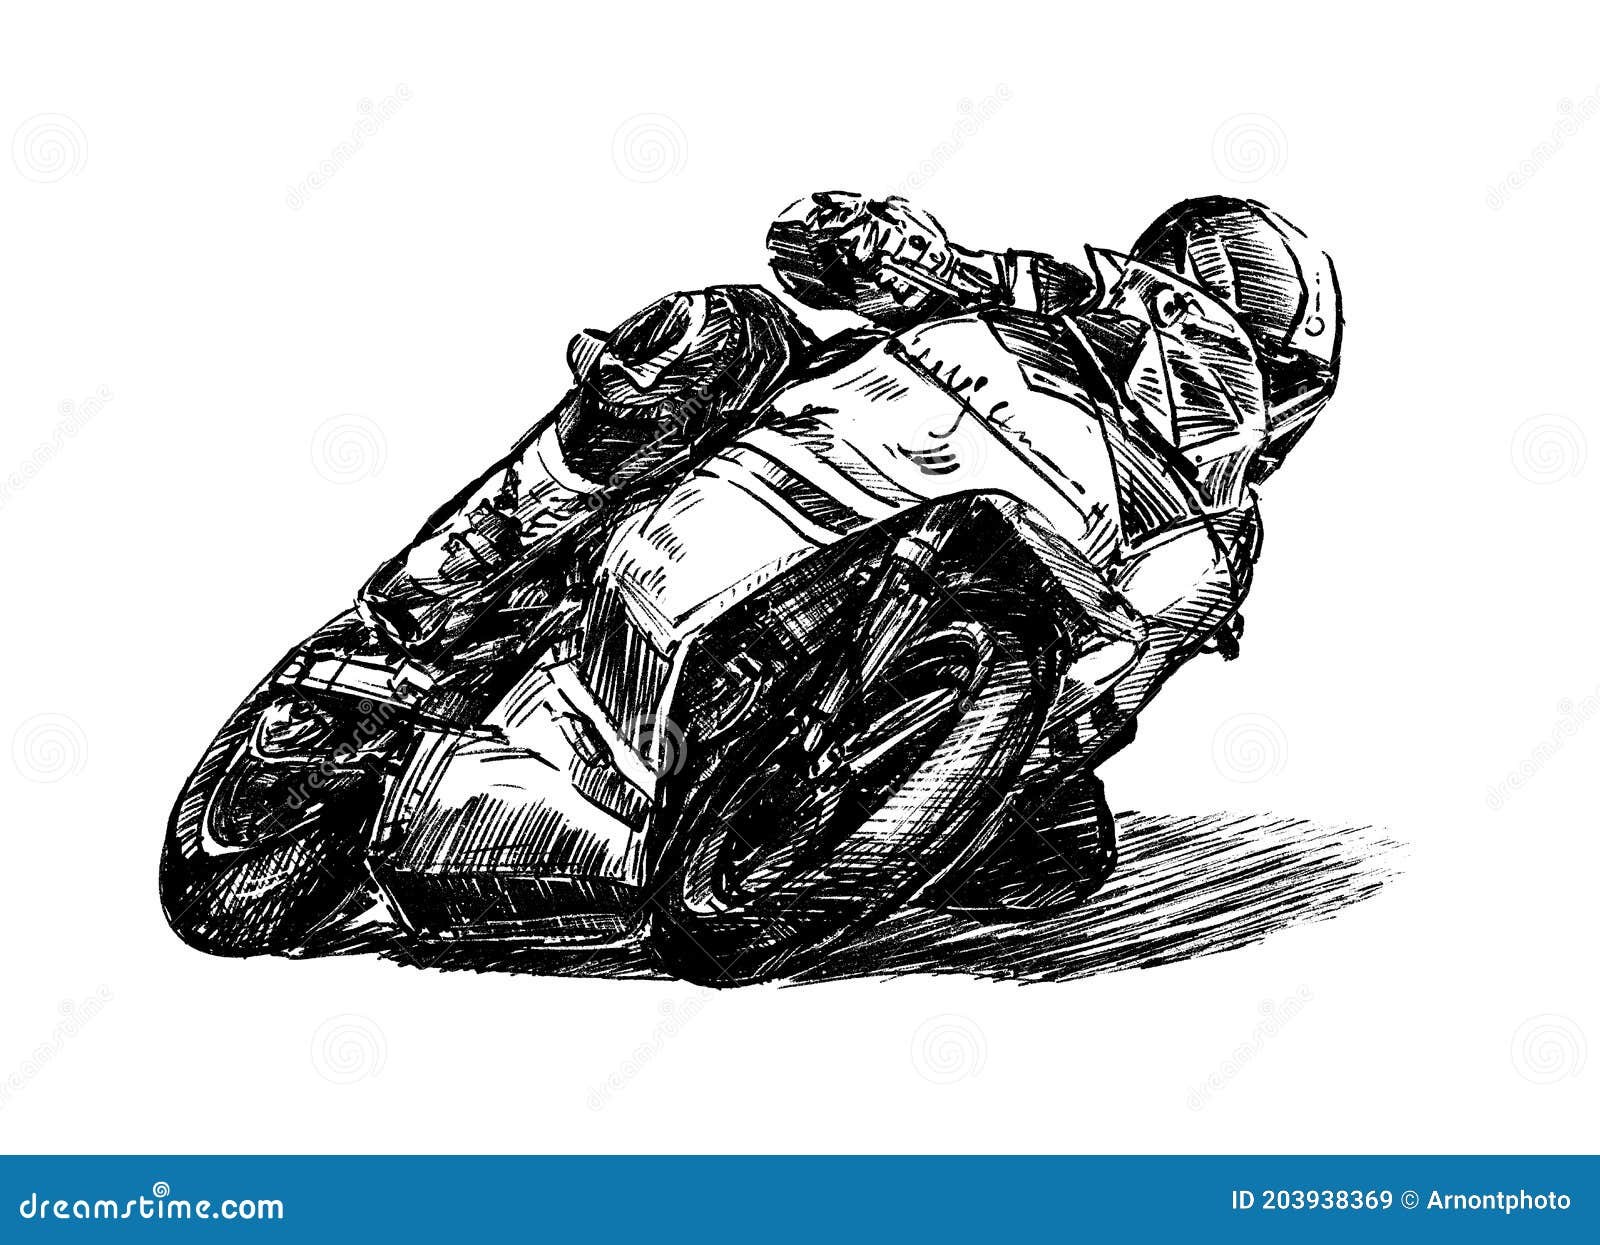 sketck of motorcycle racing hand draw